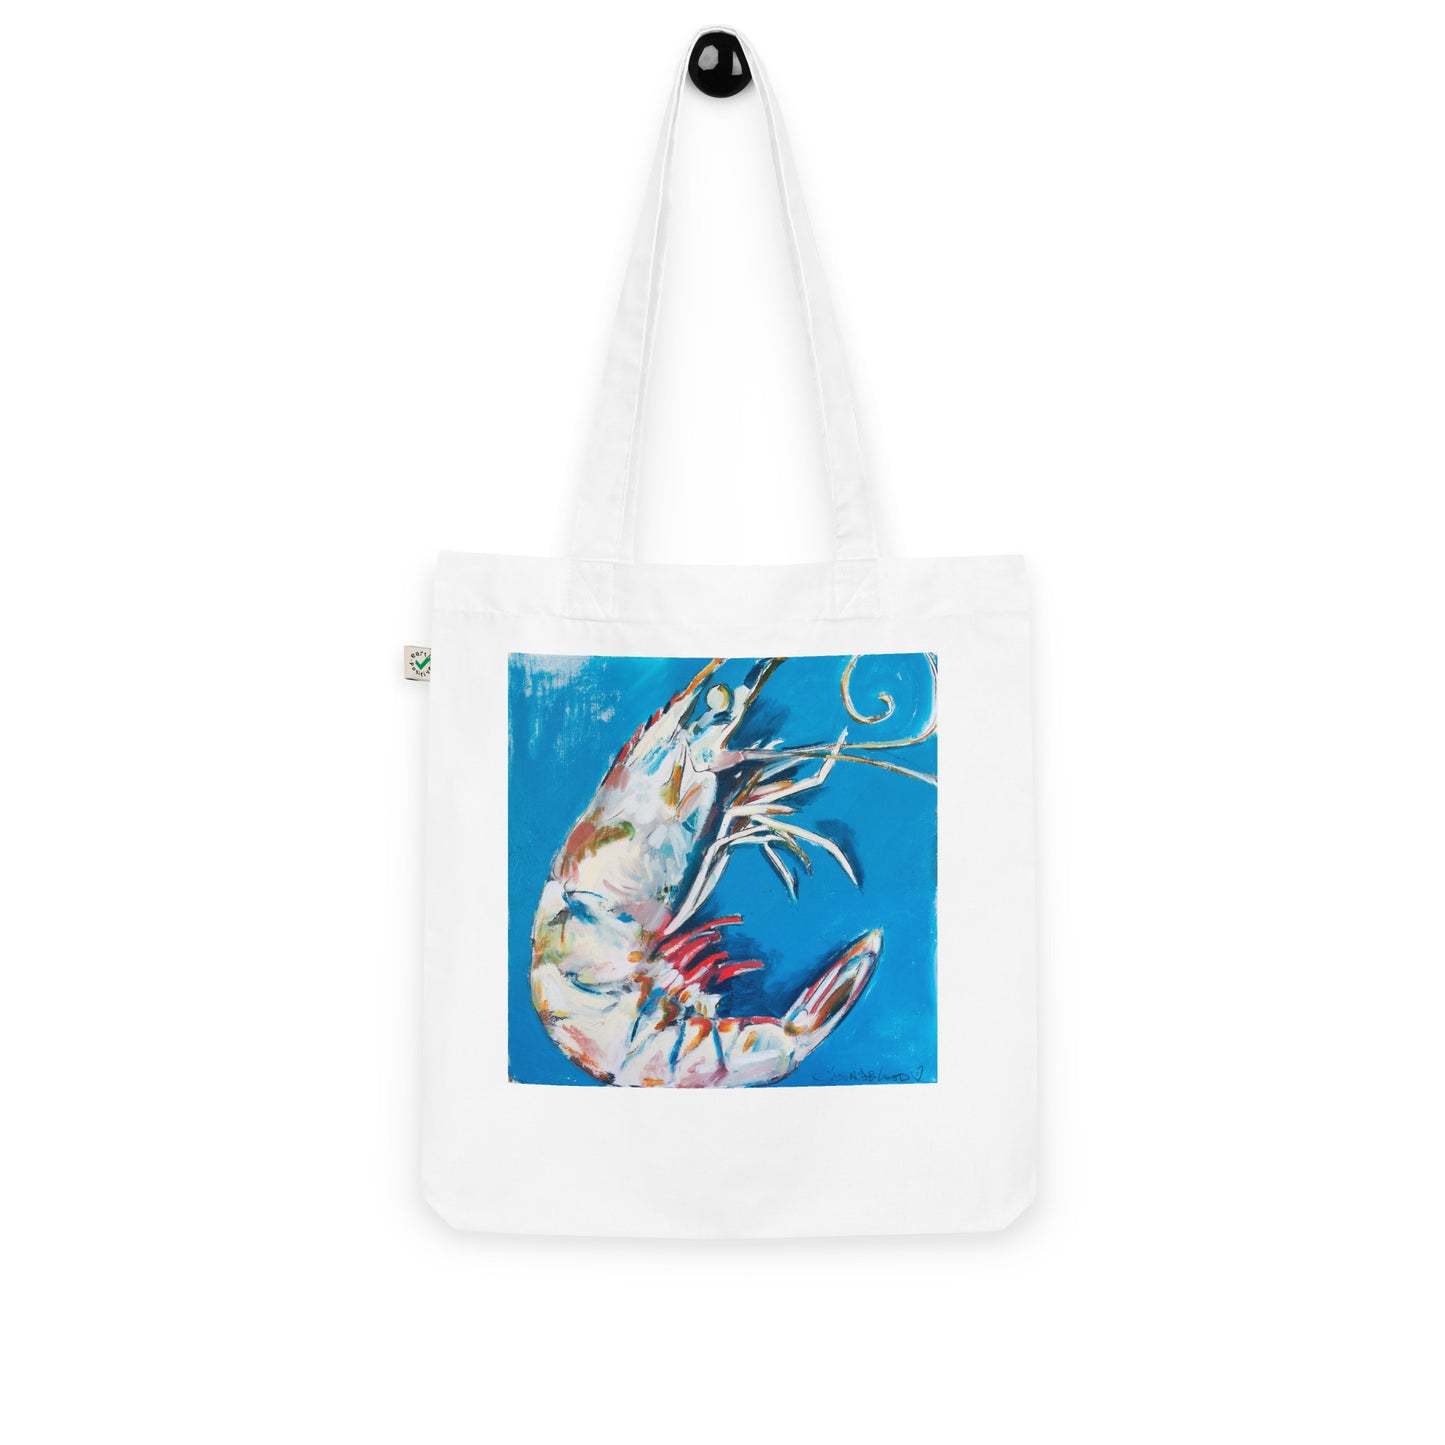 Shrimp with Aqua Blue Organic fashion tote bag